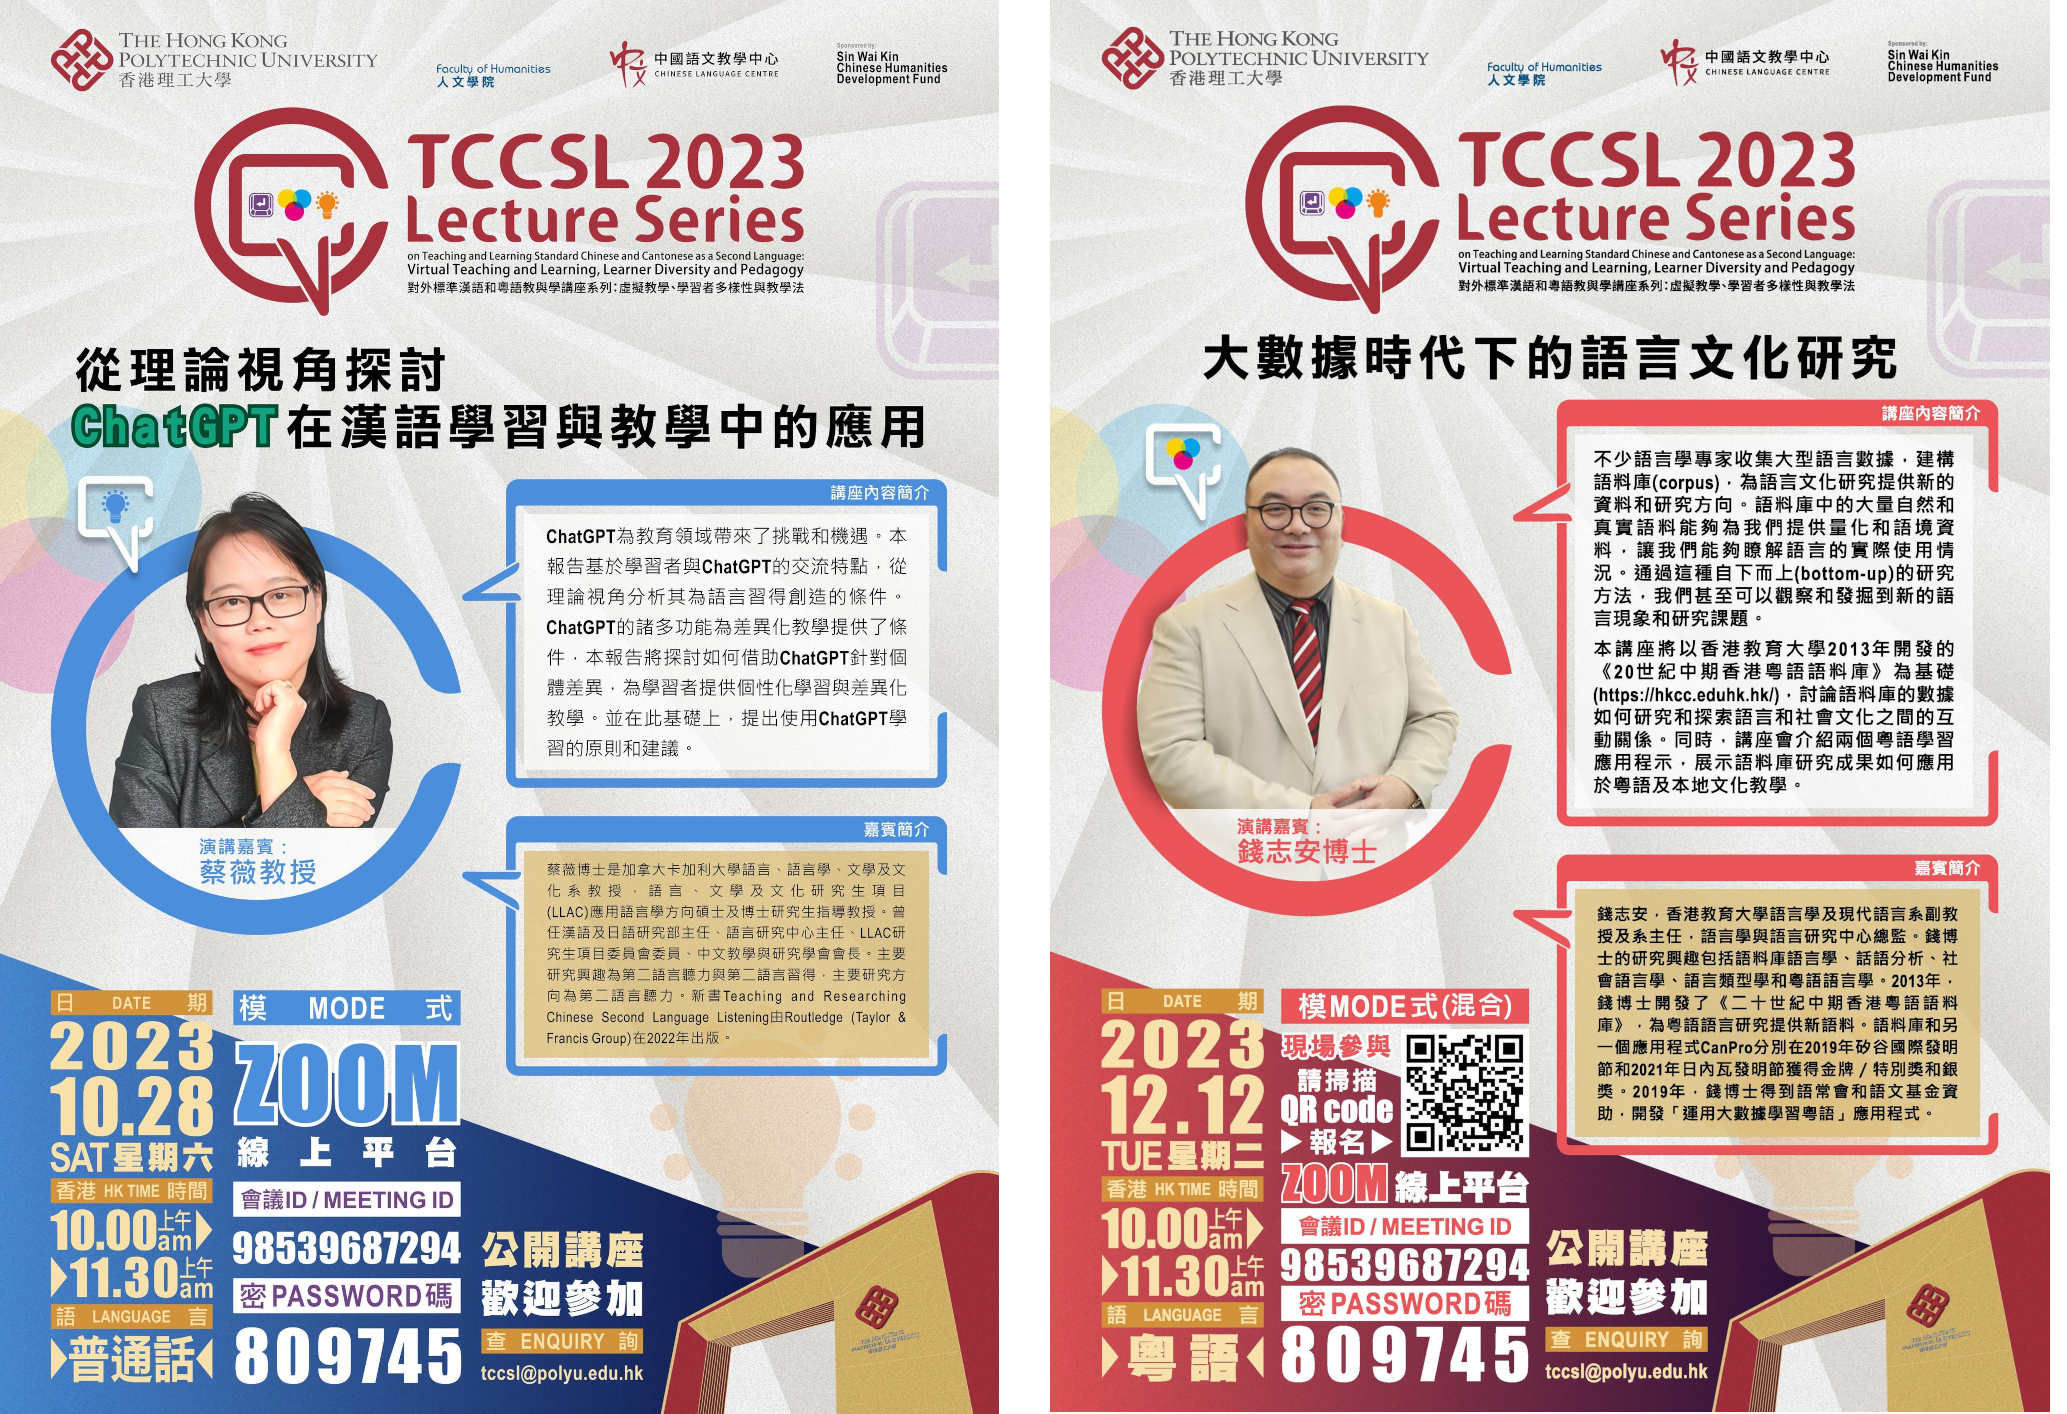 TCCSL 2023